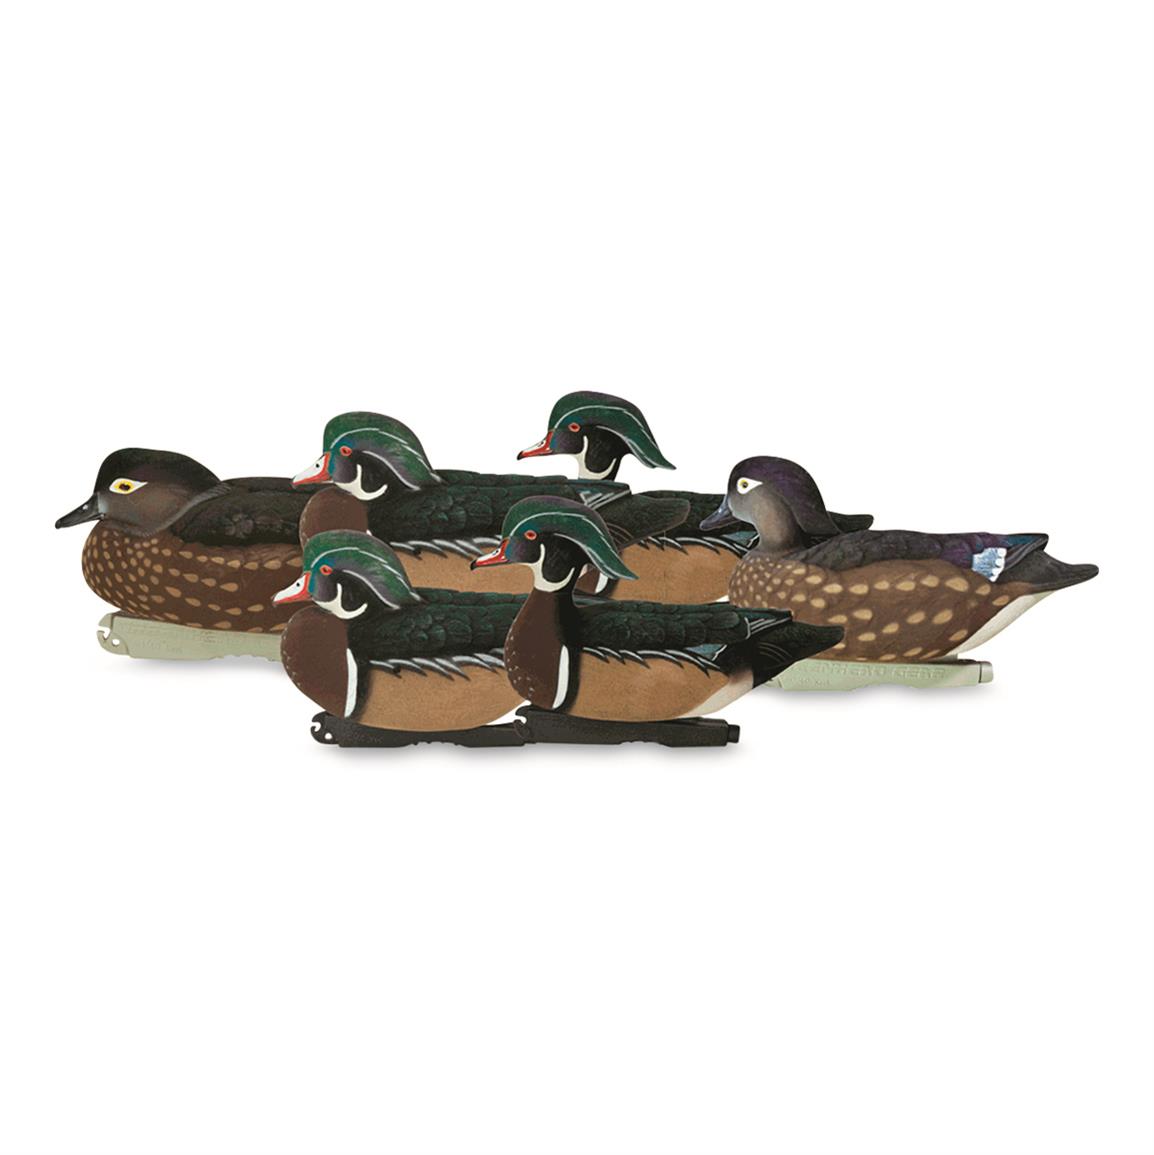 Pro-Grade Lifesize Wood Duck Decoys Avery Greenhead Gear GHG 73135-6 Pack 